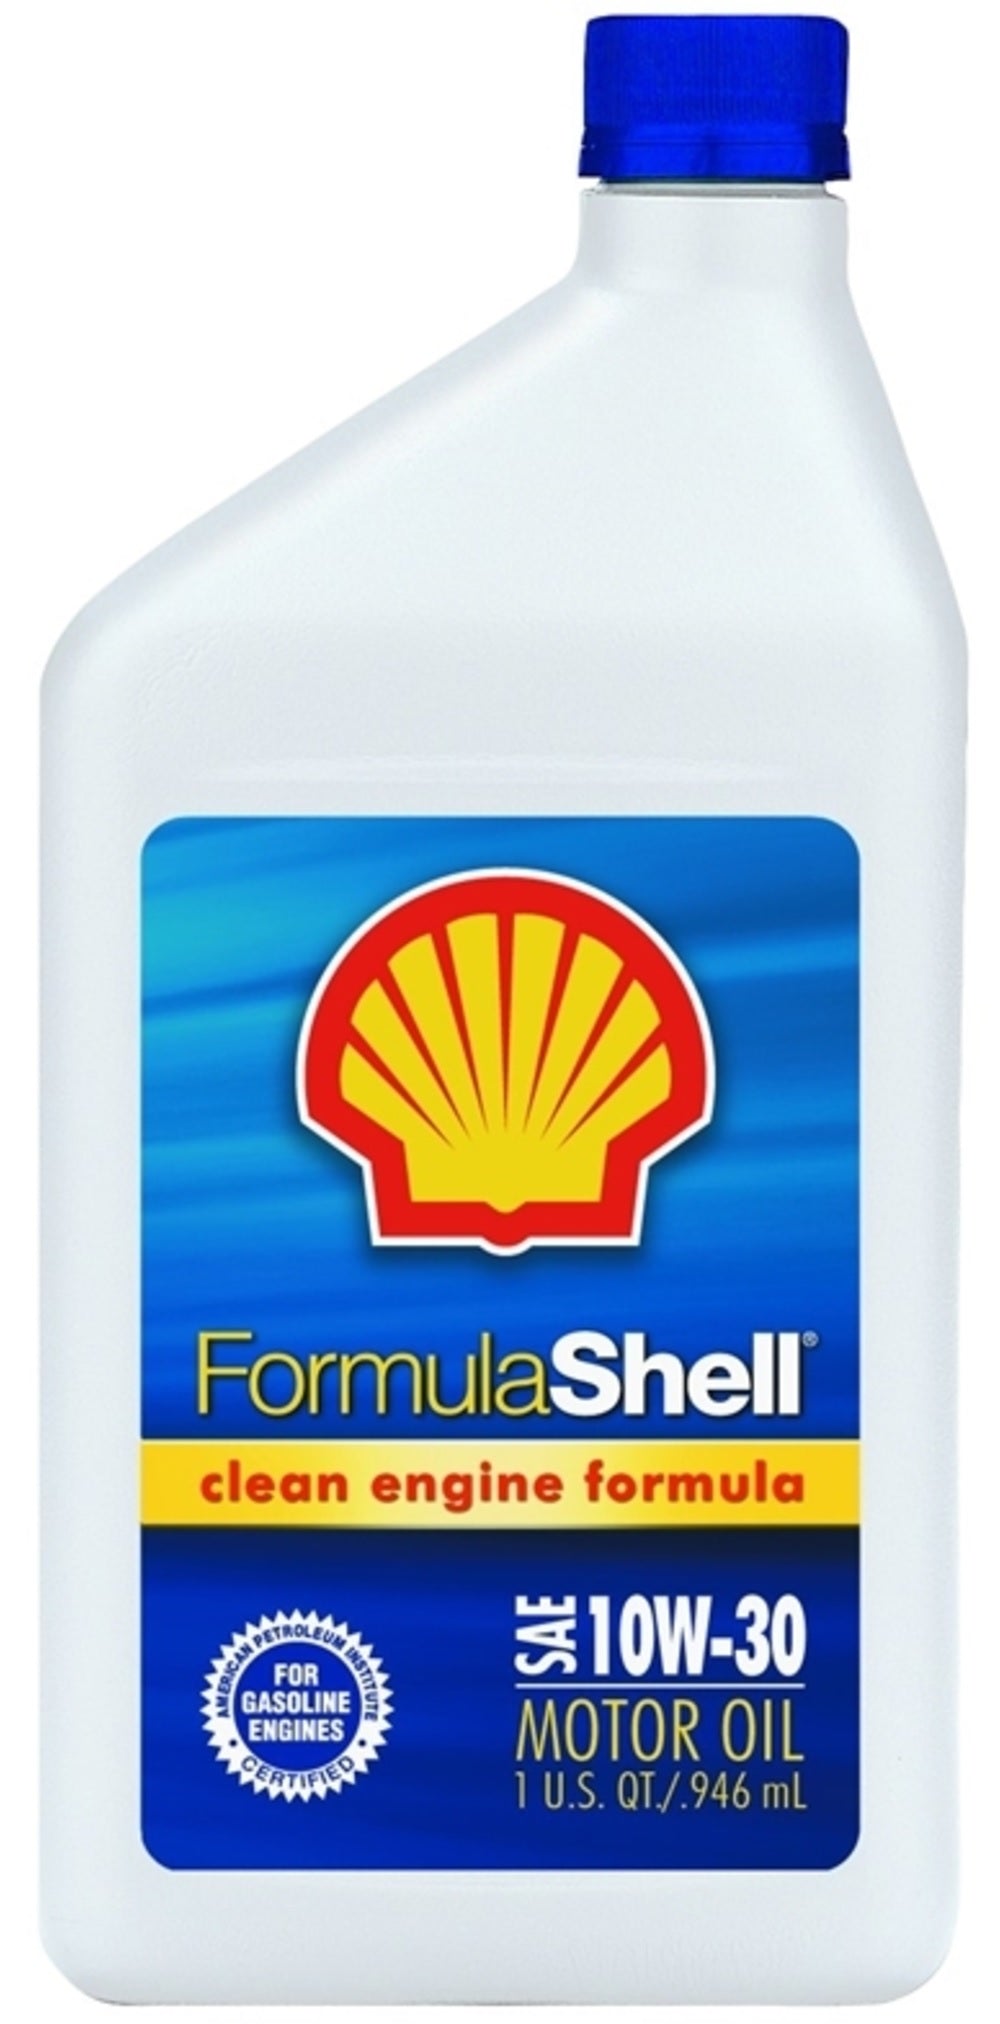 Formula Shell 550049239 Clean Engine Motor Oil, 1 Quart